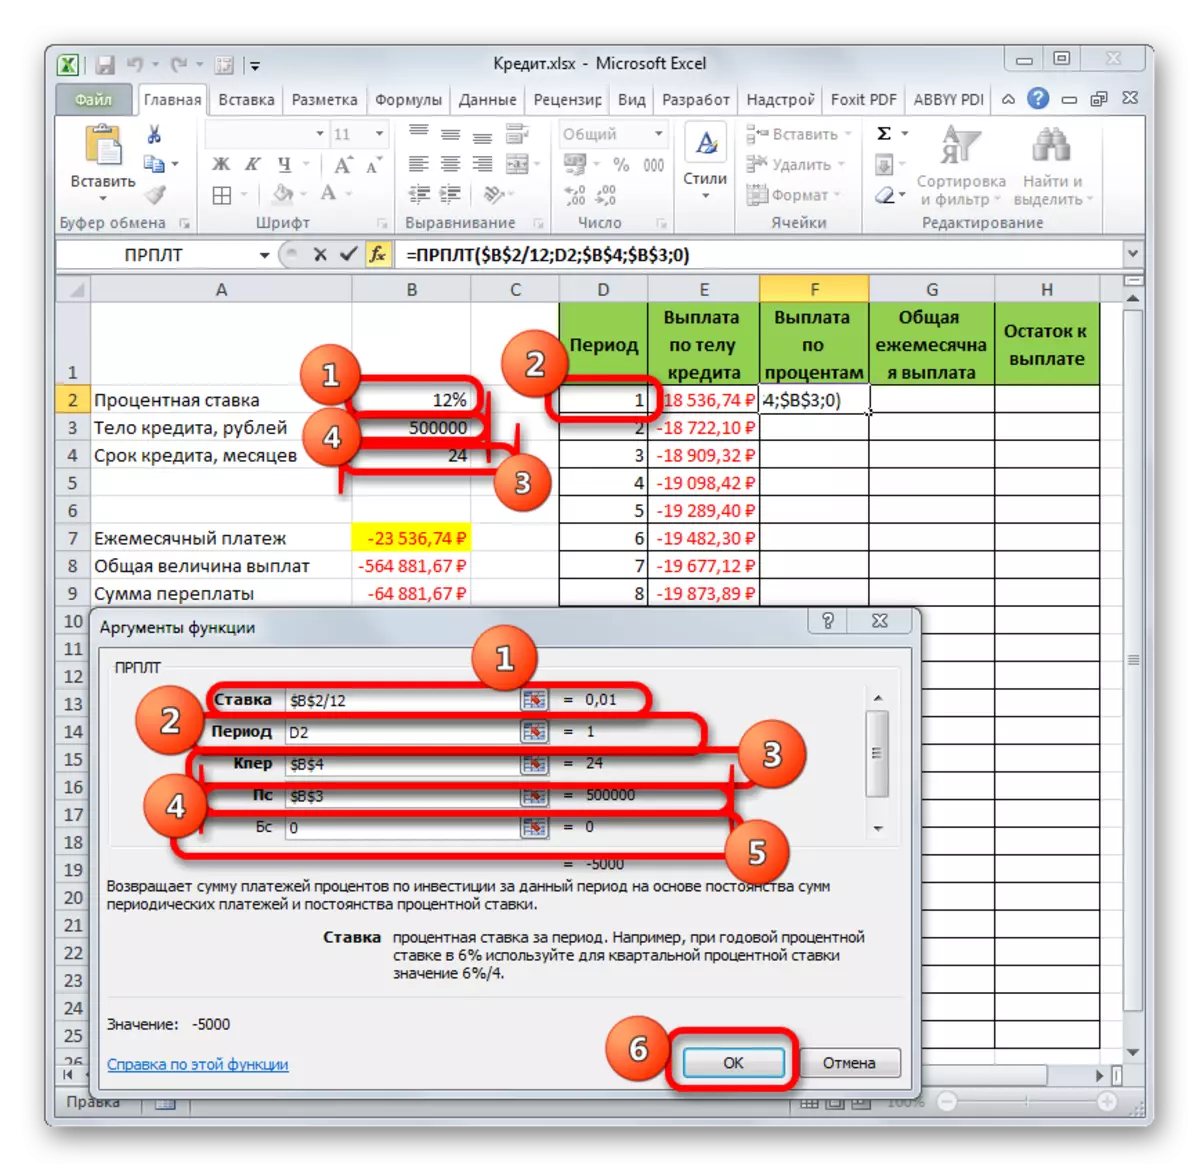 Microsoft Excel లో CFult ఫంక్షన్ వాదనలు